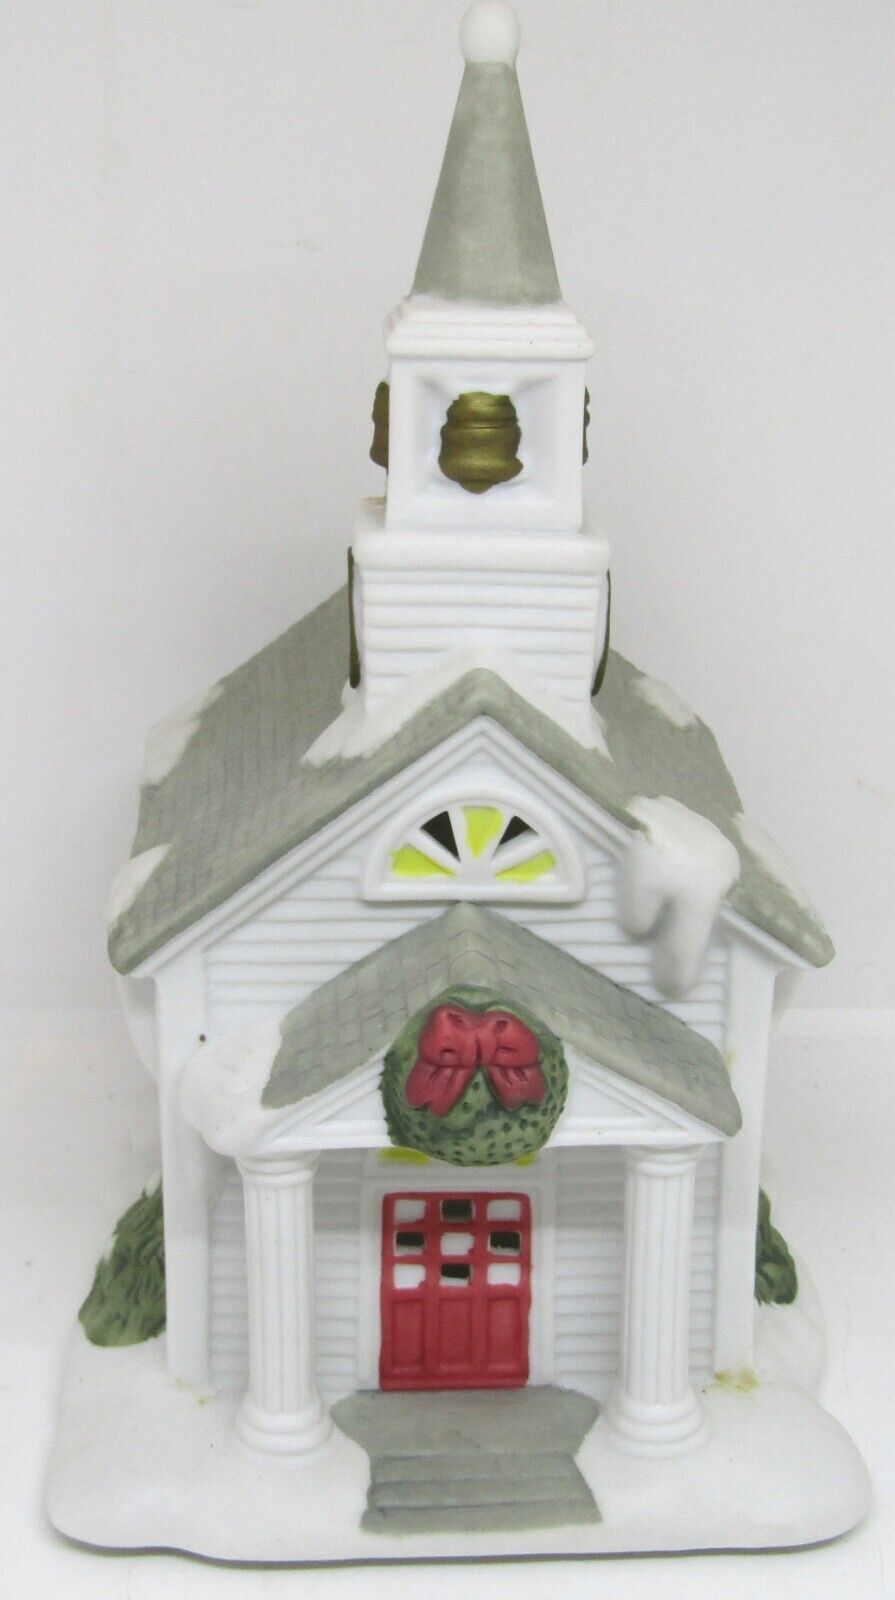 Partylite “The Church” Tea Light Candle Christmas Village LIGHT UP CHURCH W BOX.